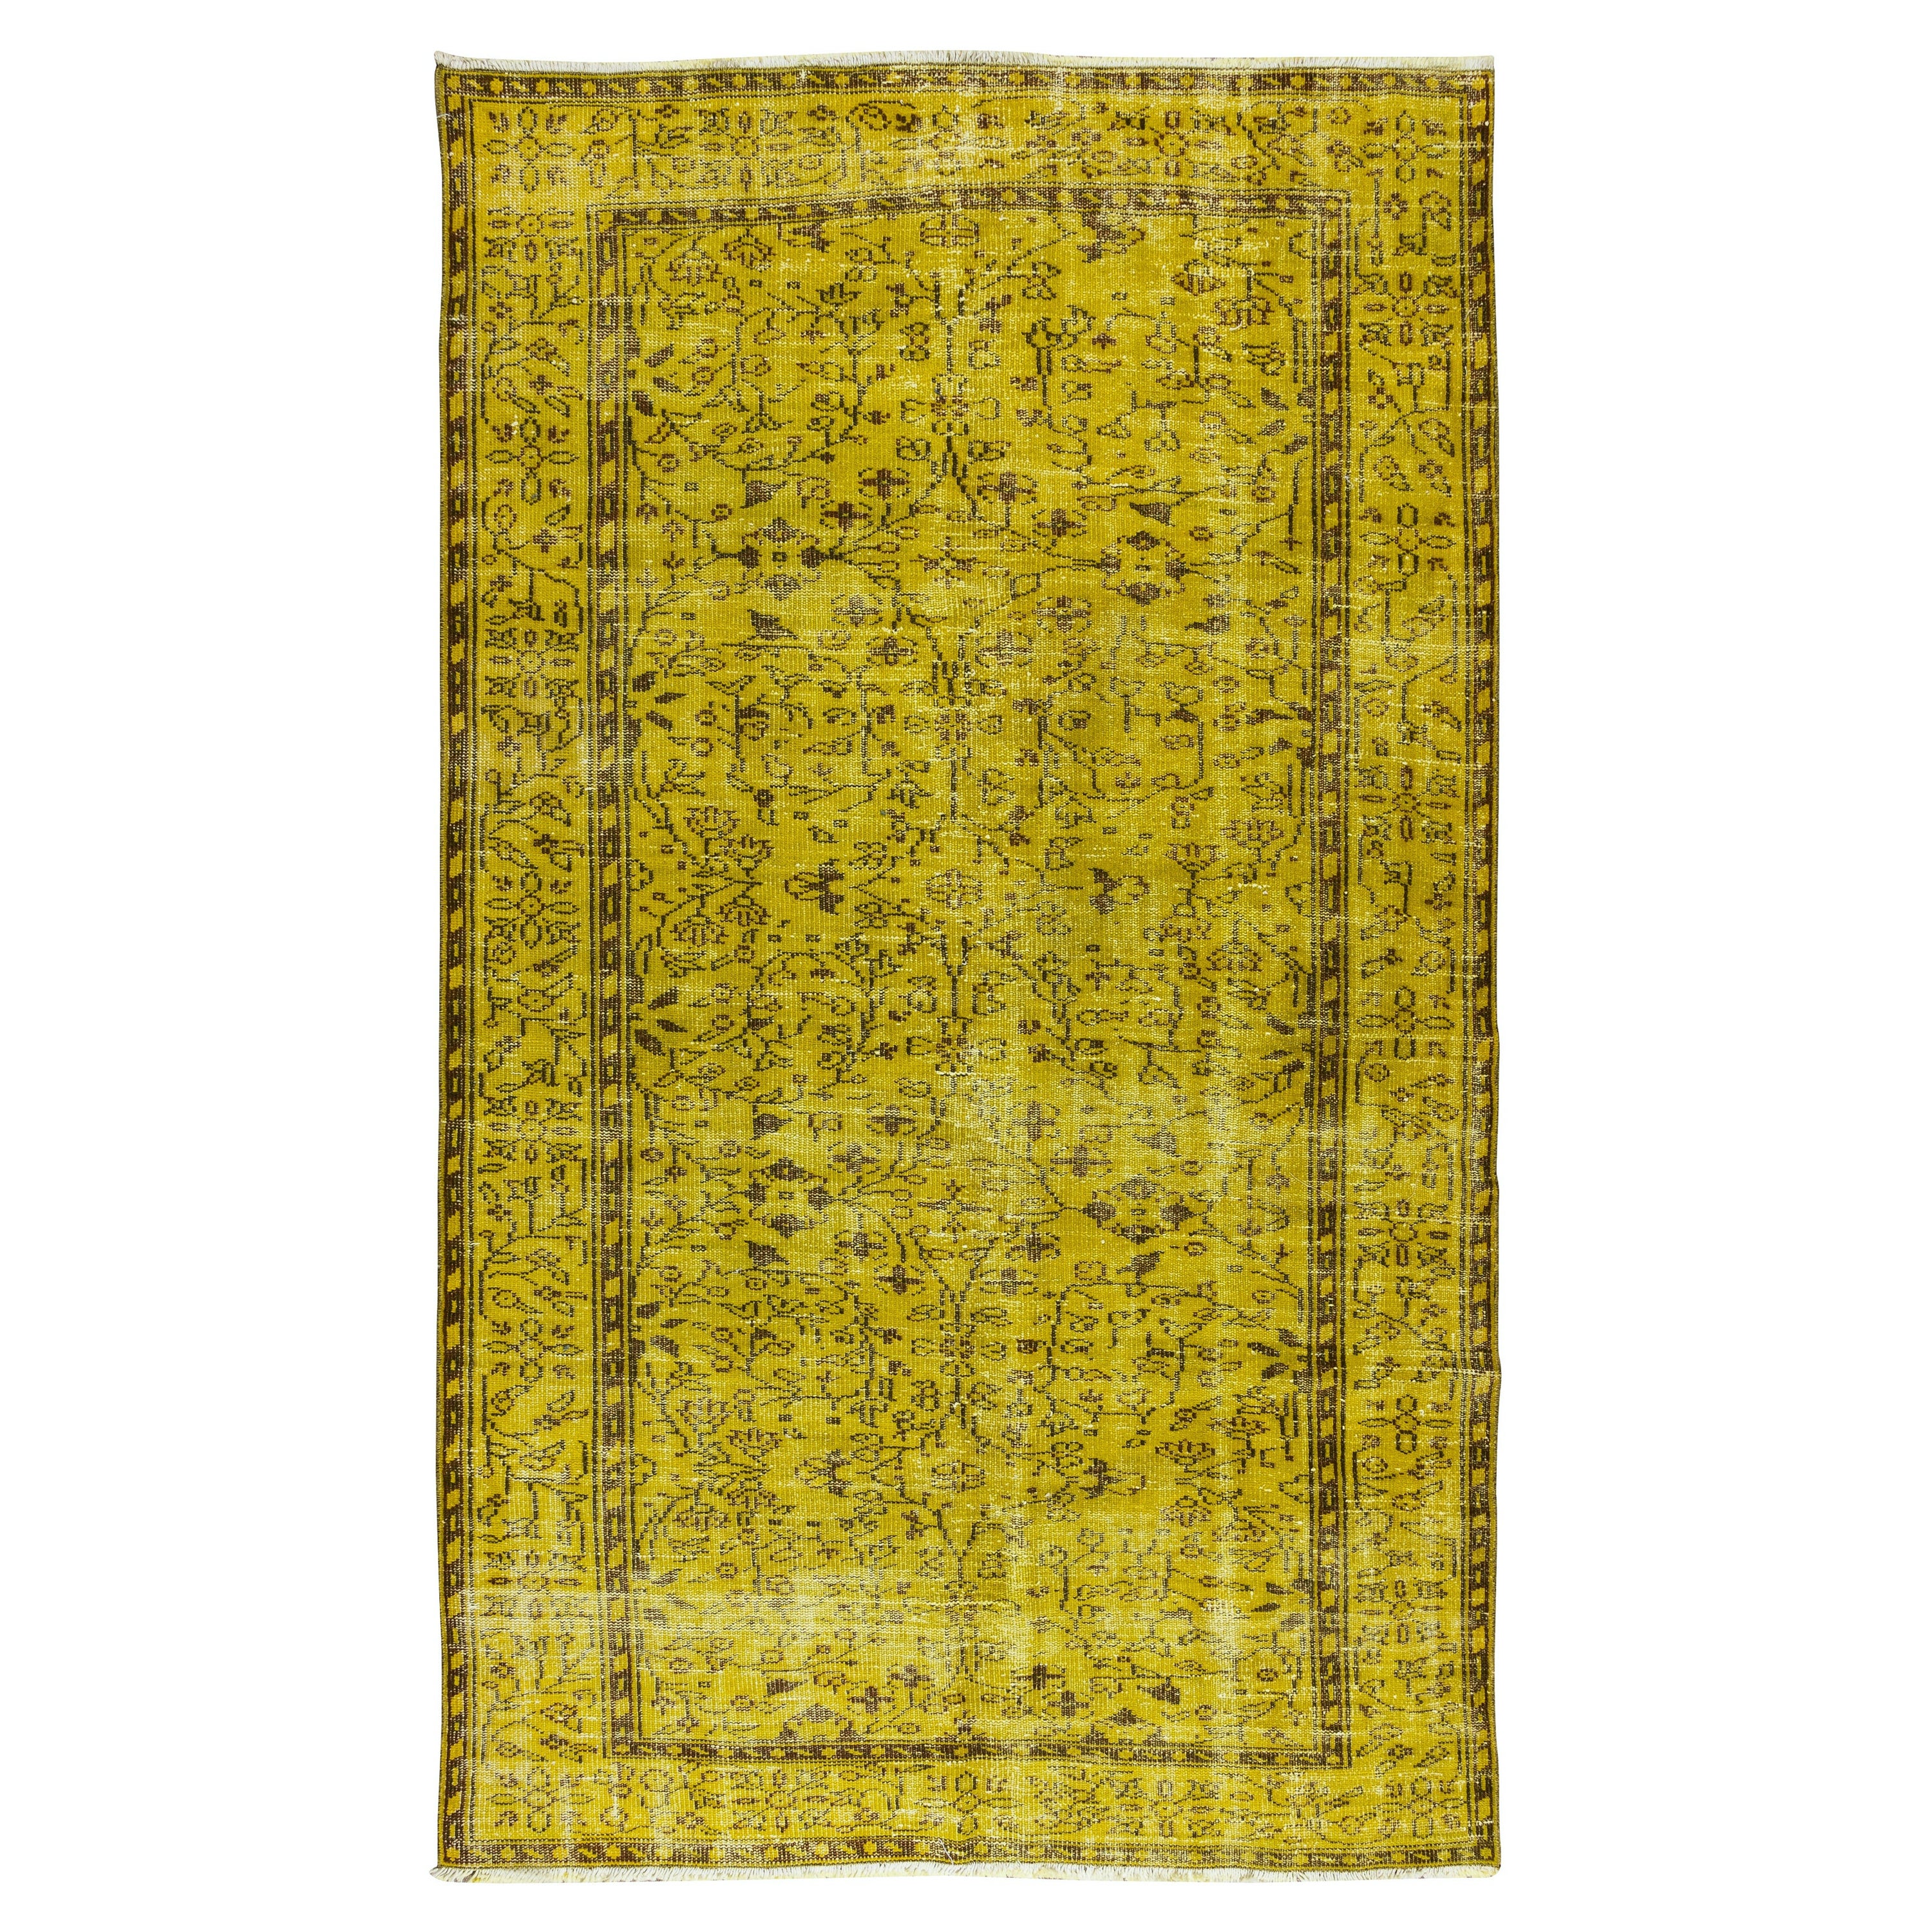 5.3x8.6 Ft Handmade Turkish Yellow Area Rug with Floral Design (Tapis turc à motifs floraux)